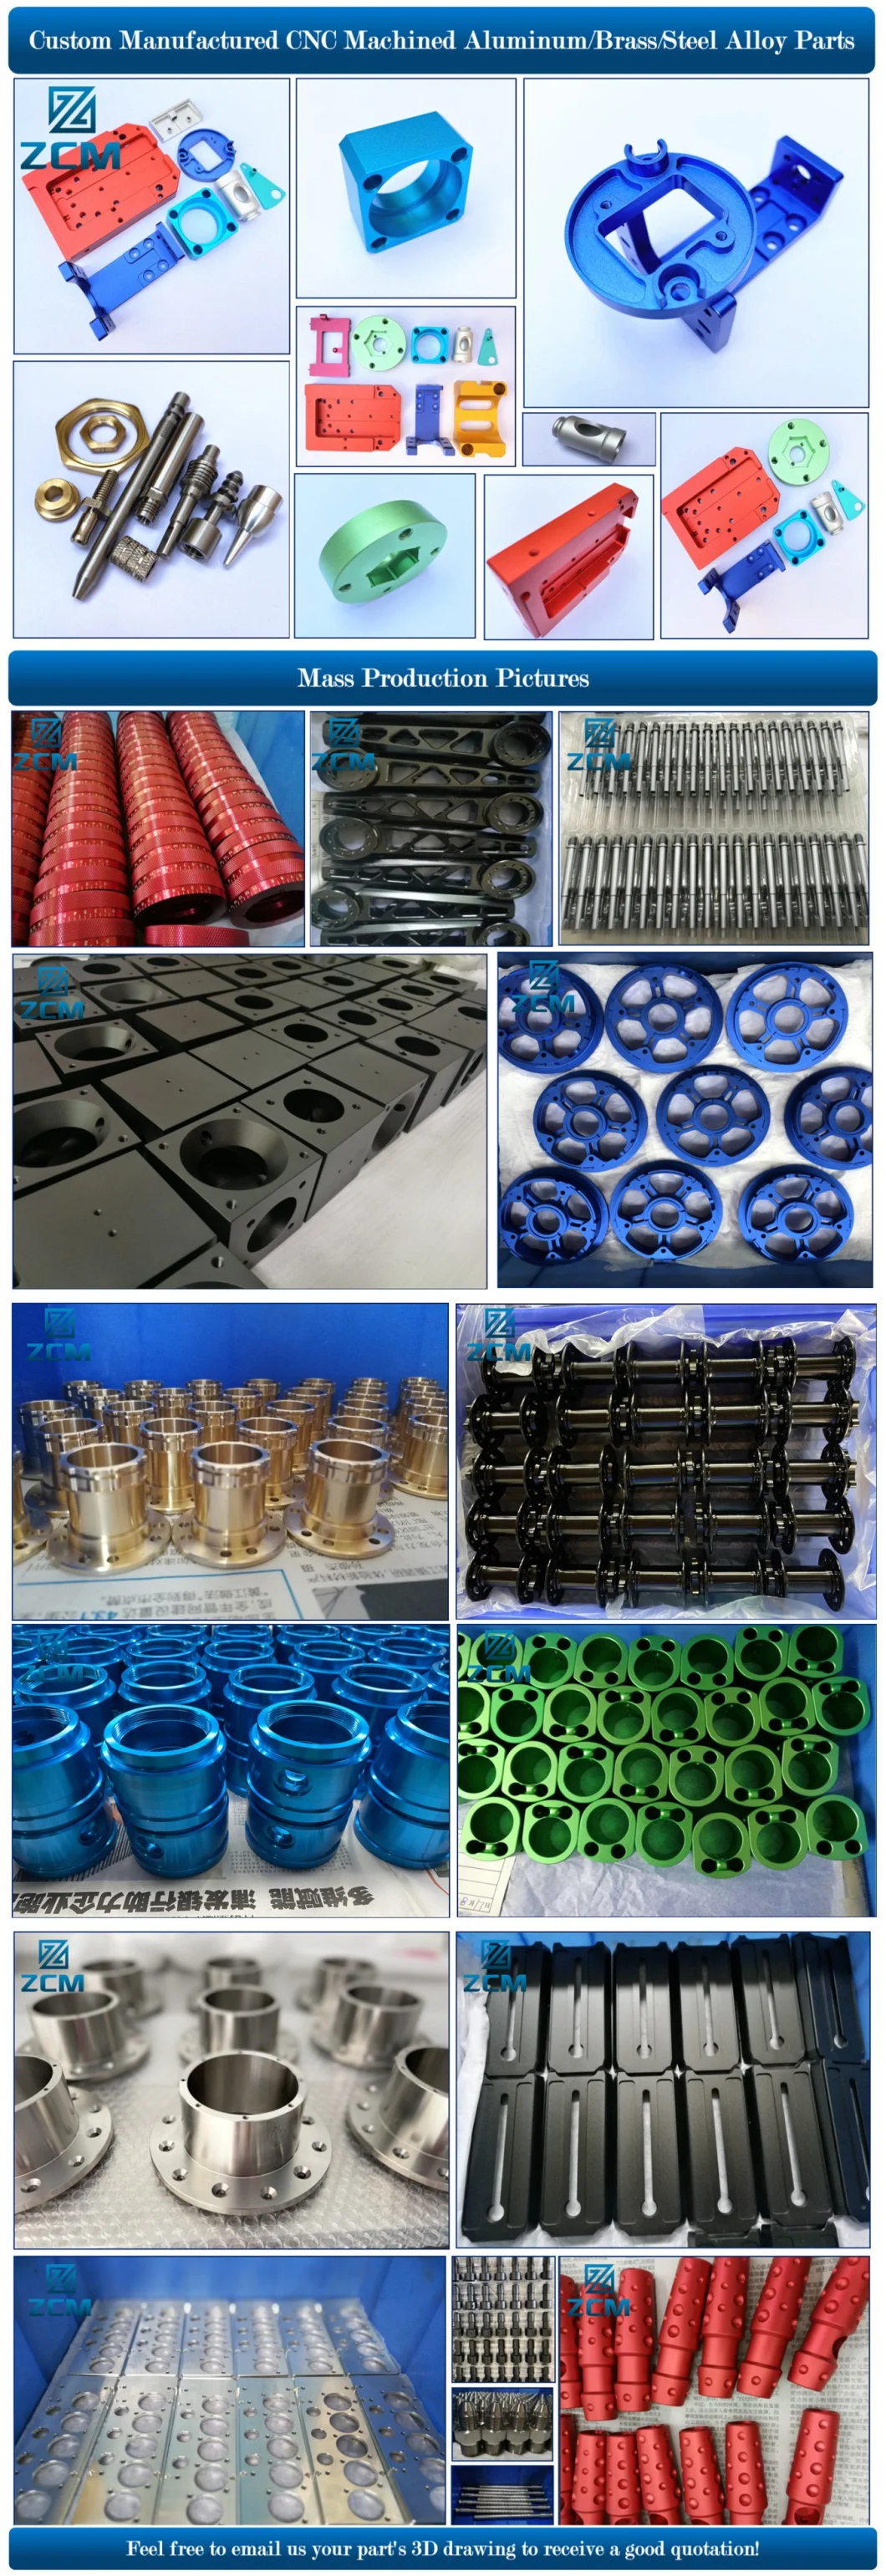 Shenzhen Custom Manufacturing Brass/Steel/Zinc/Aluminum Alloy Metal Round Housing Flange Adapter Fitting Parts CNC Machinery Machine Part CNC Machining Services